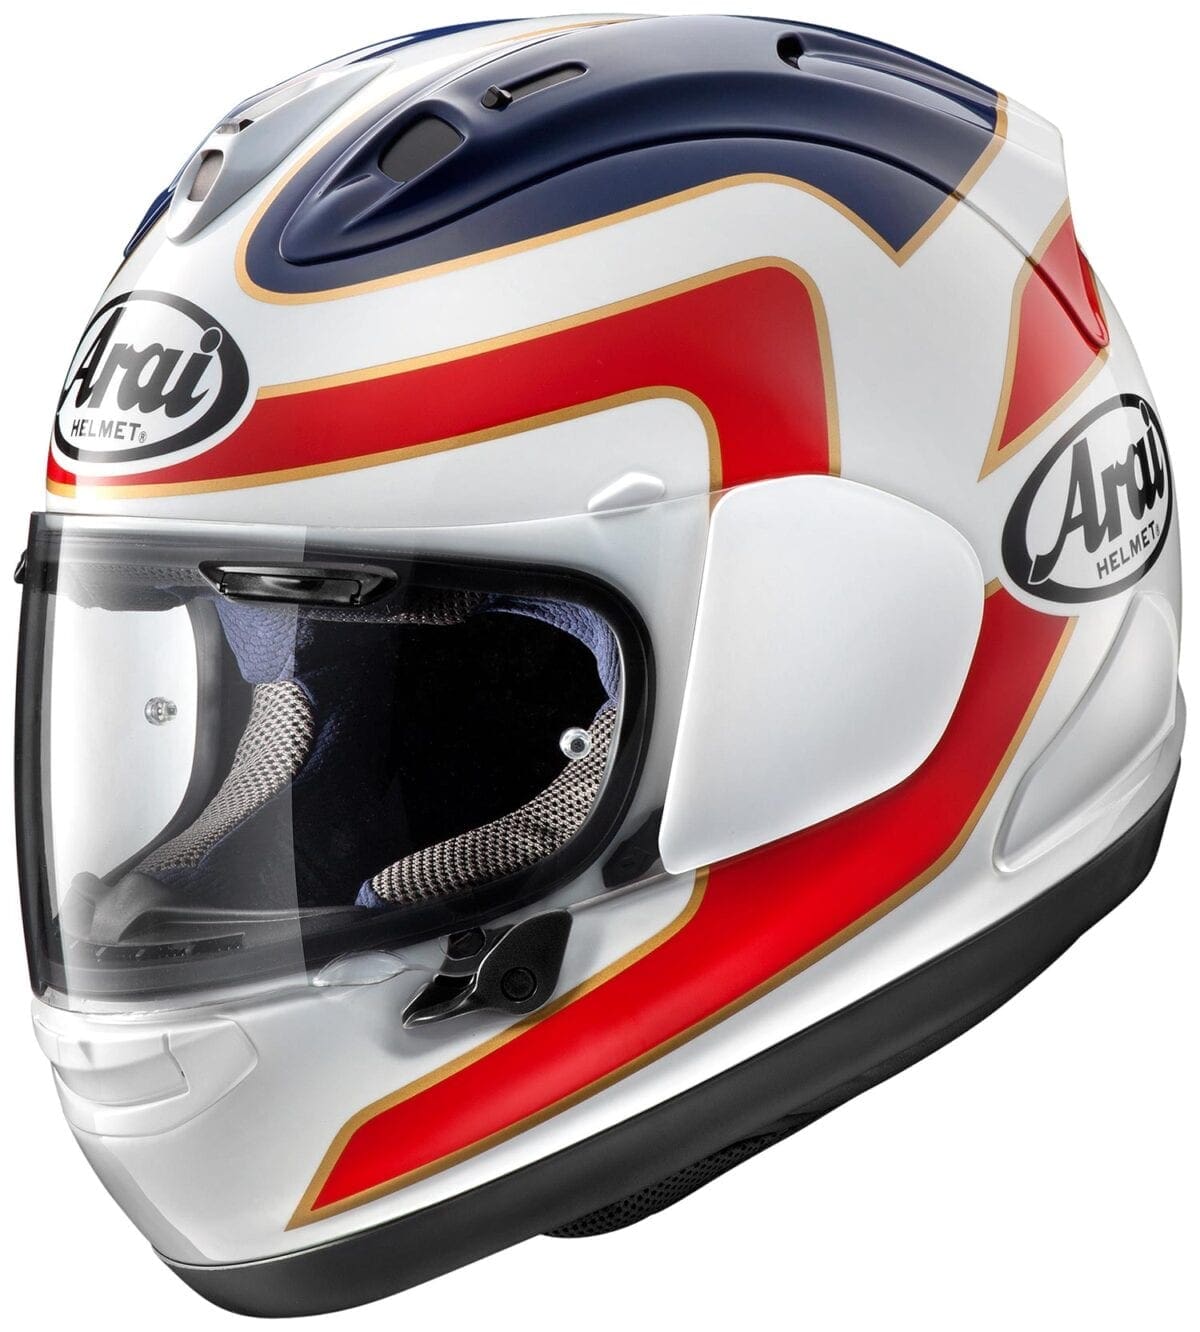 079_Arai-RX-7V-helmet-main